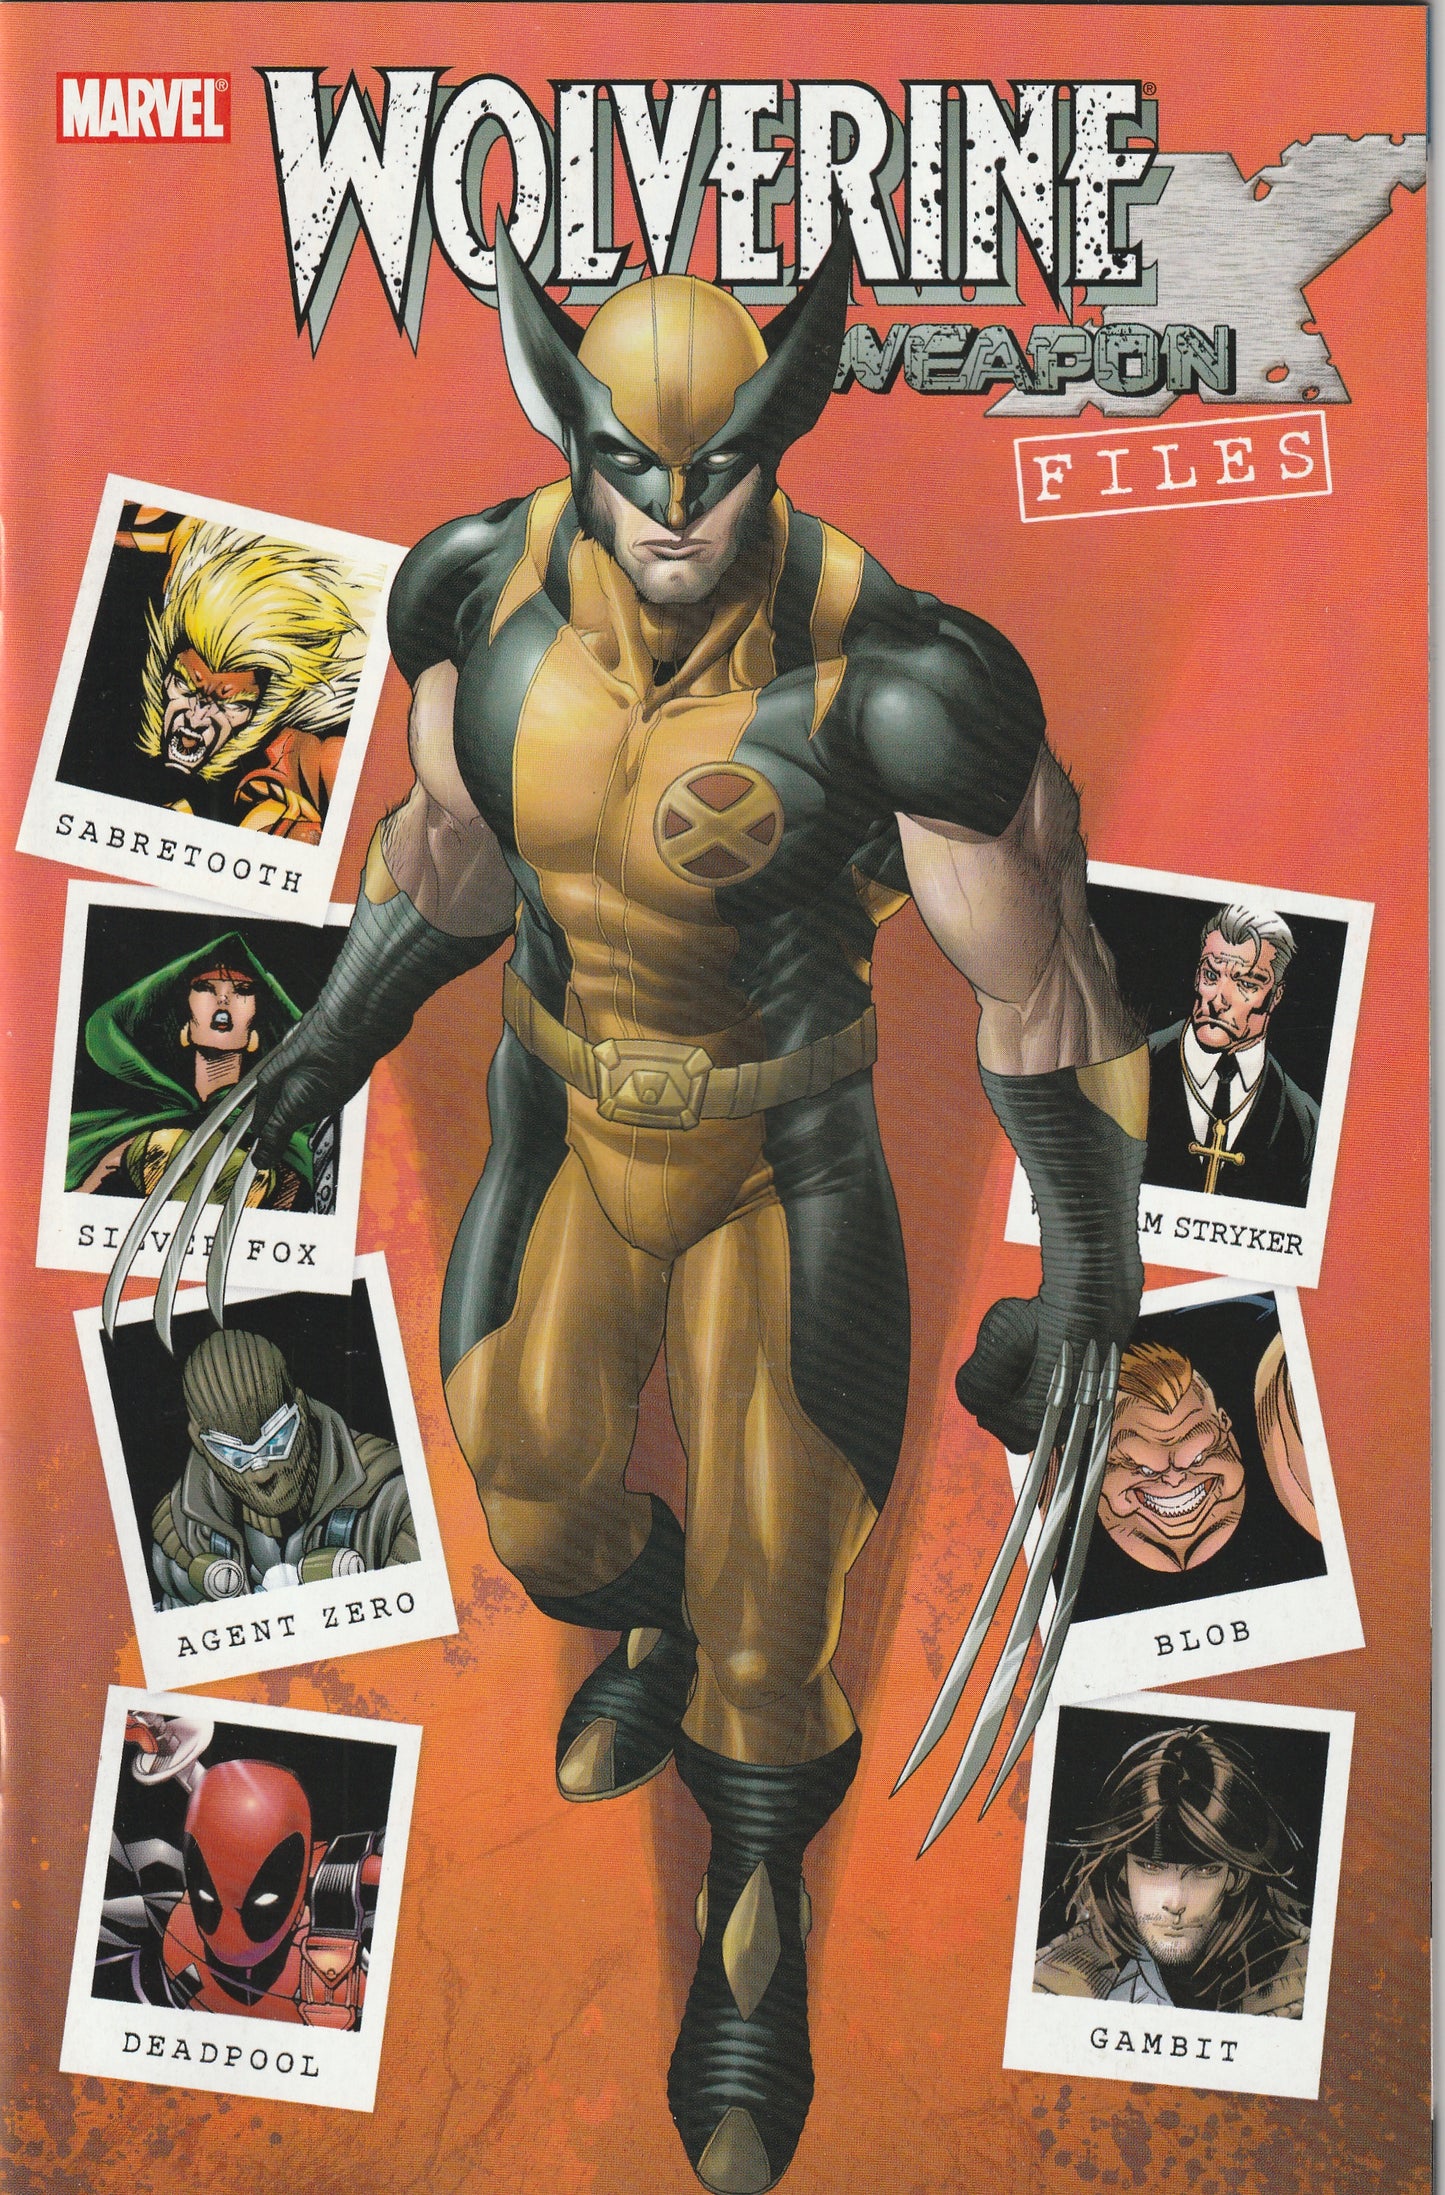 Wolverine Weapon X Files (2009)